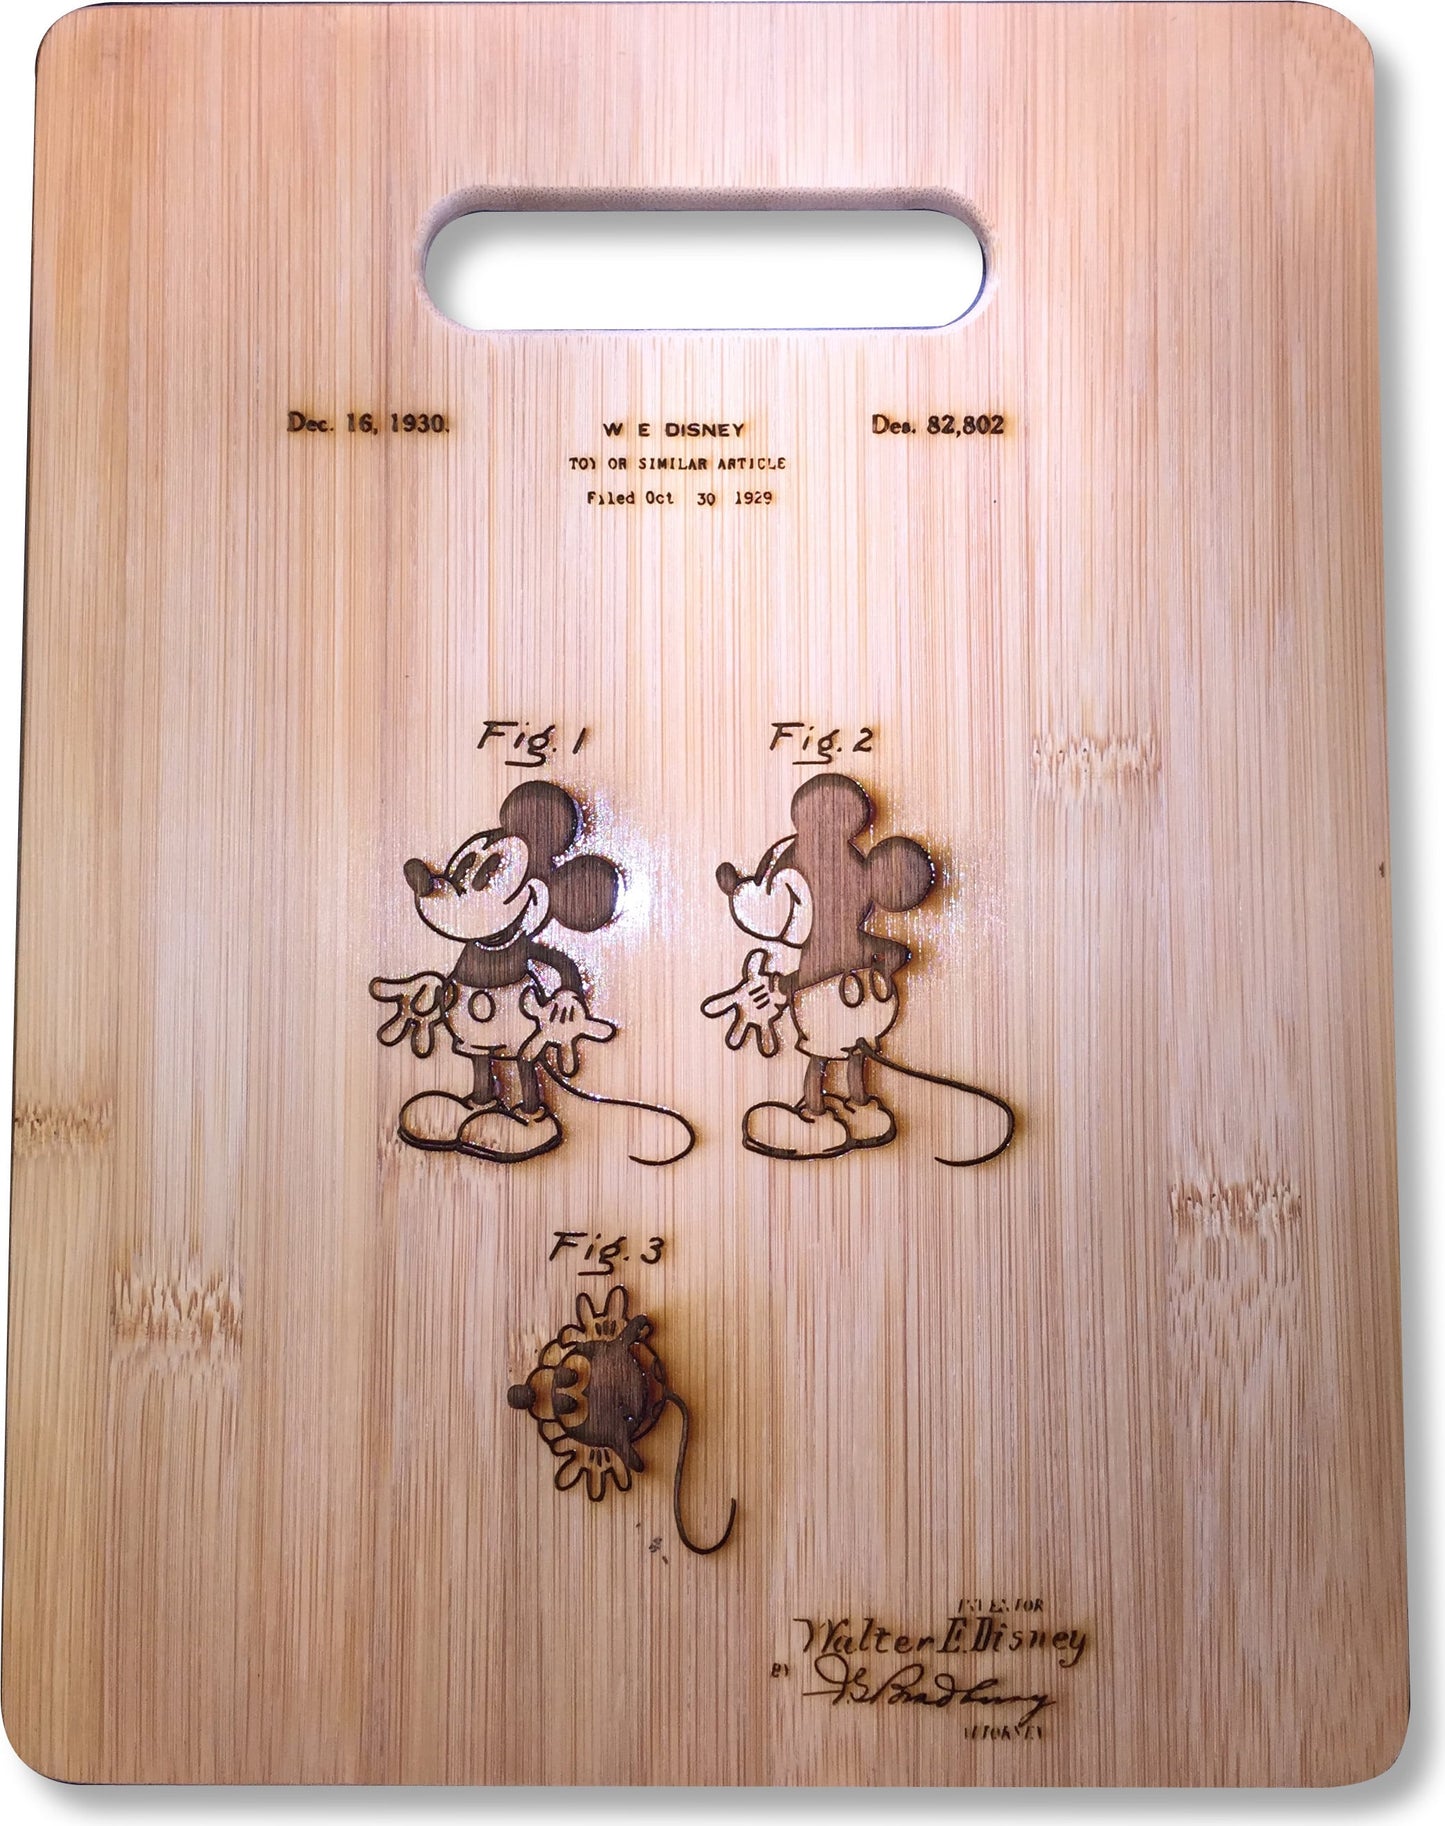 Mickey Mouse - Original Patent Wood Cutting Board